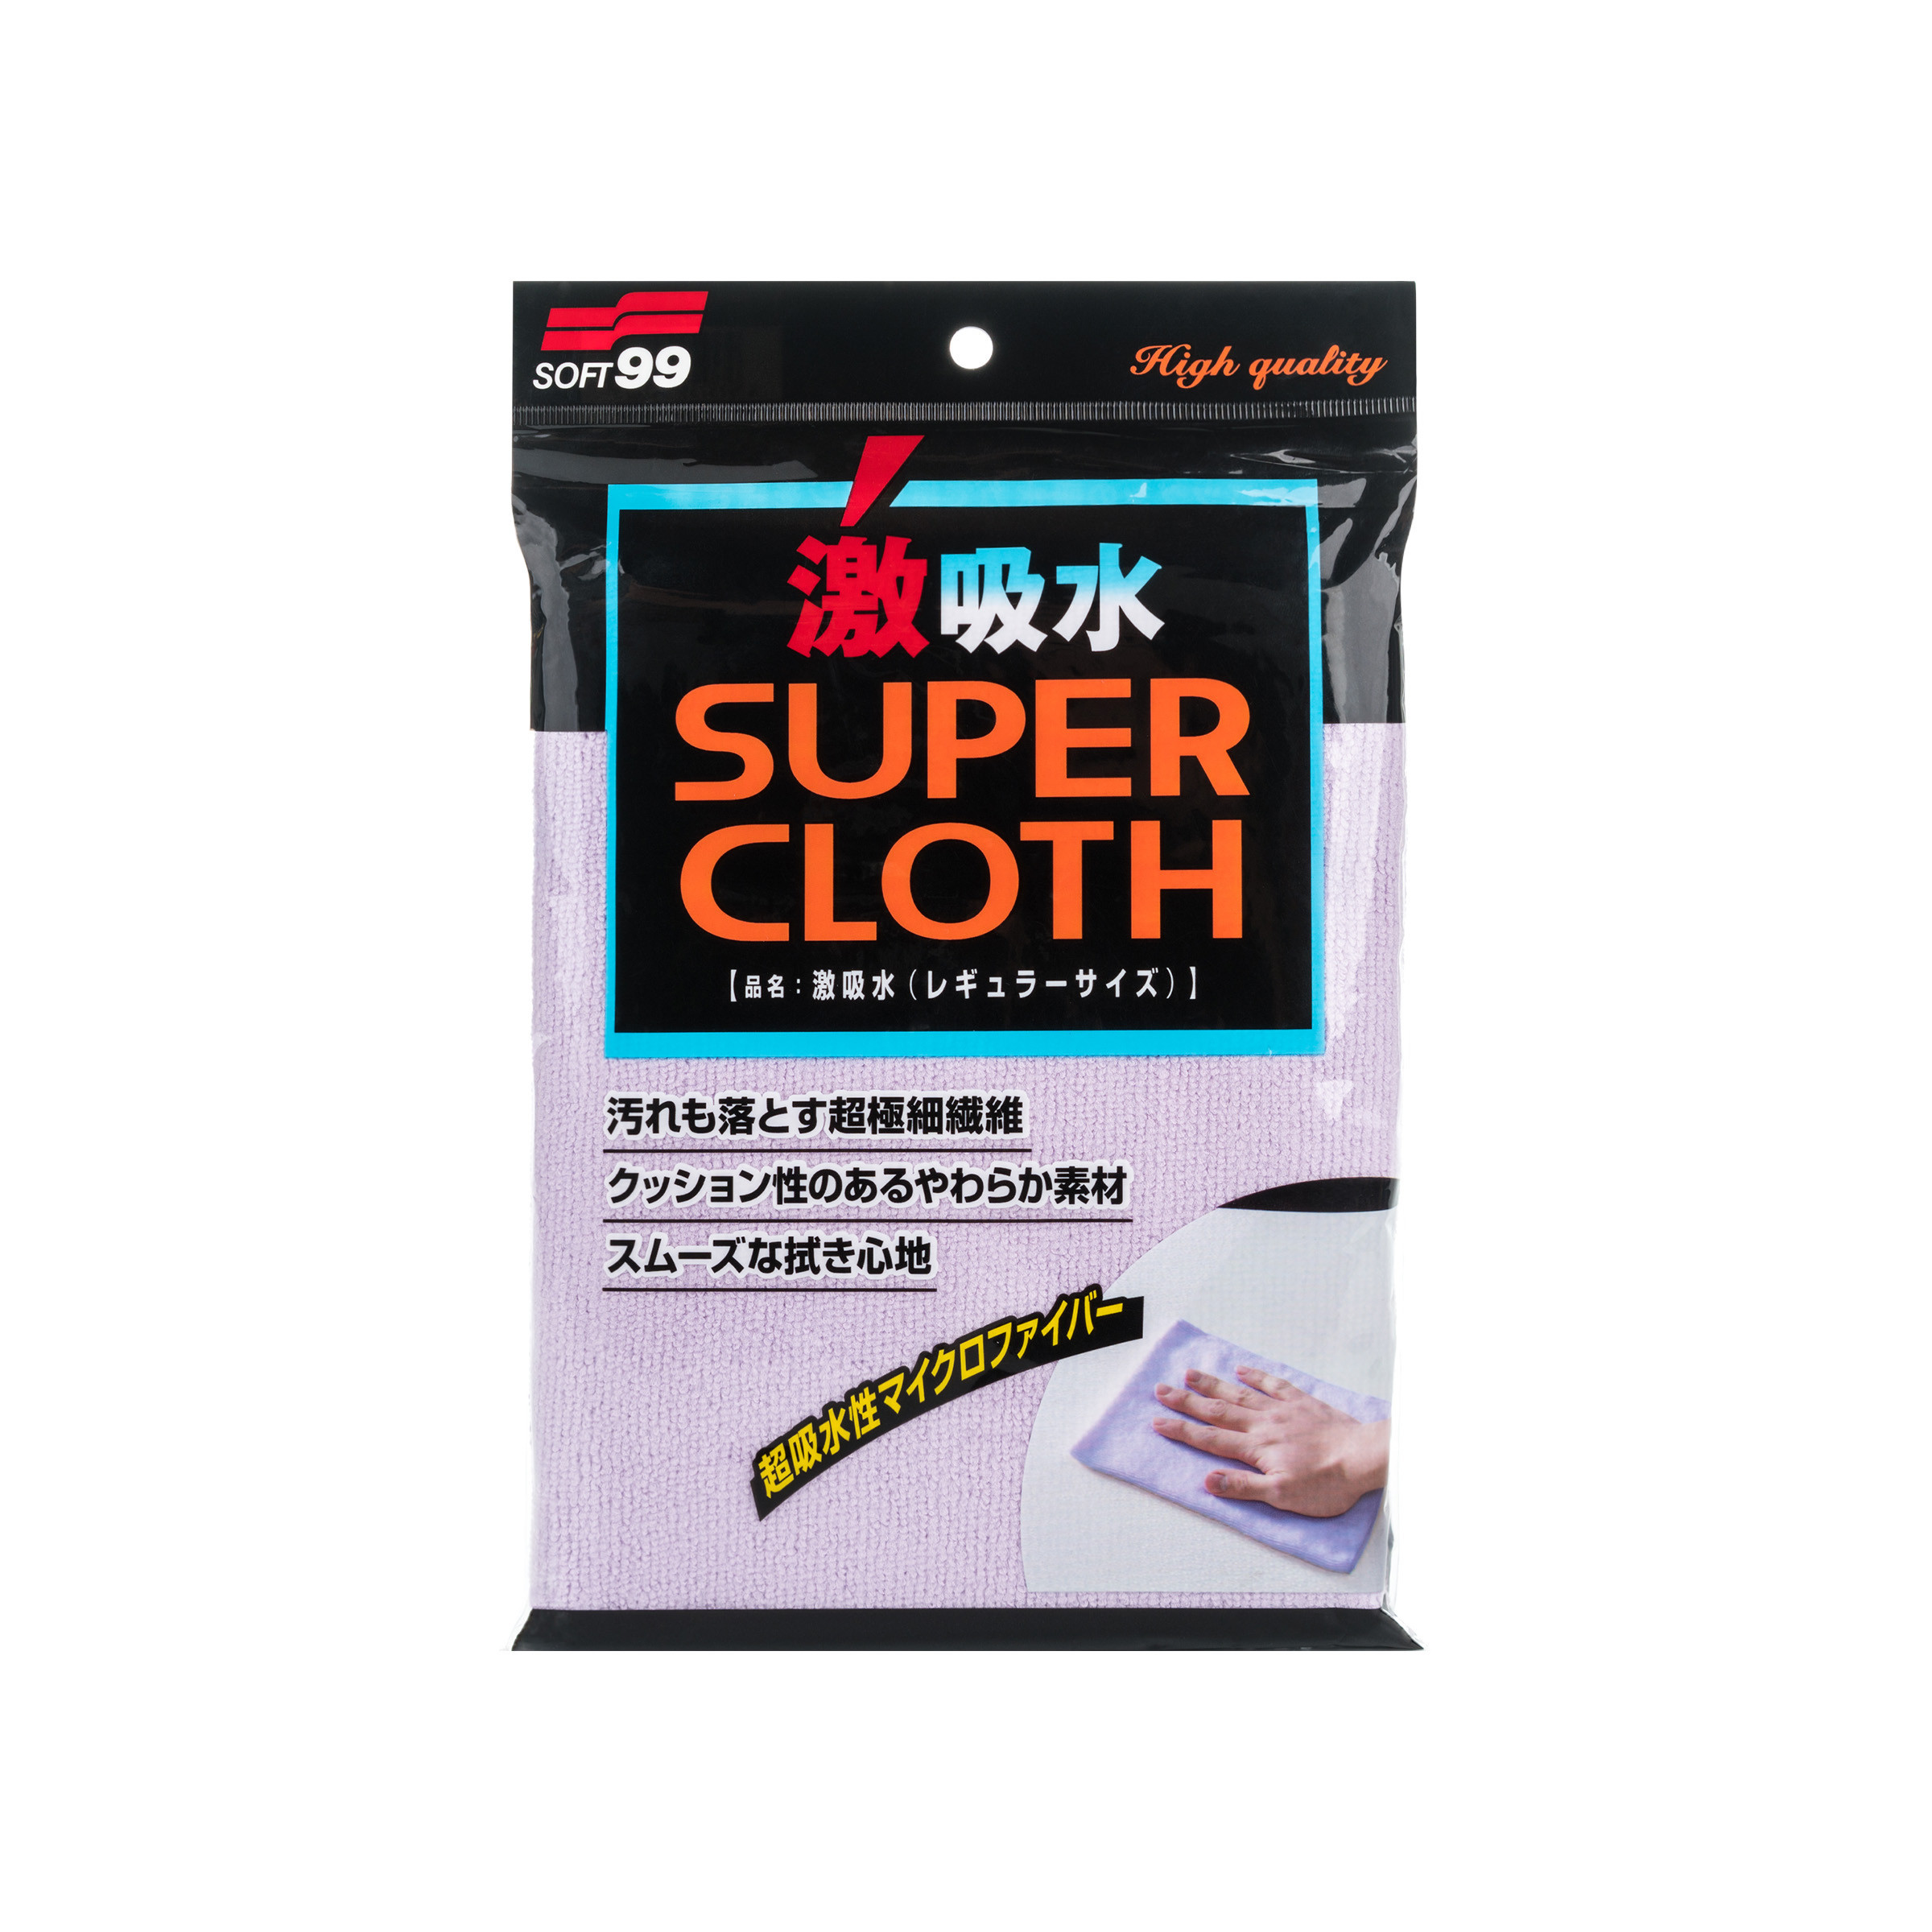 Microfiber Super Cloth, microfiber